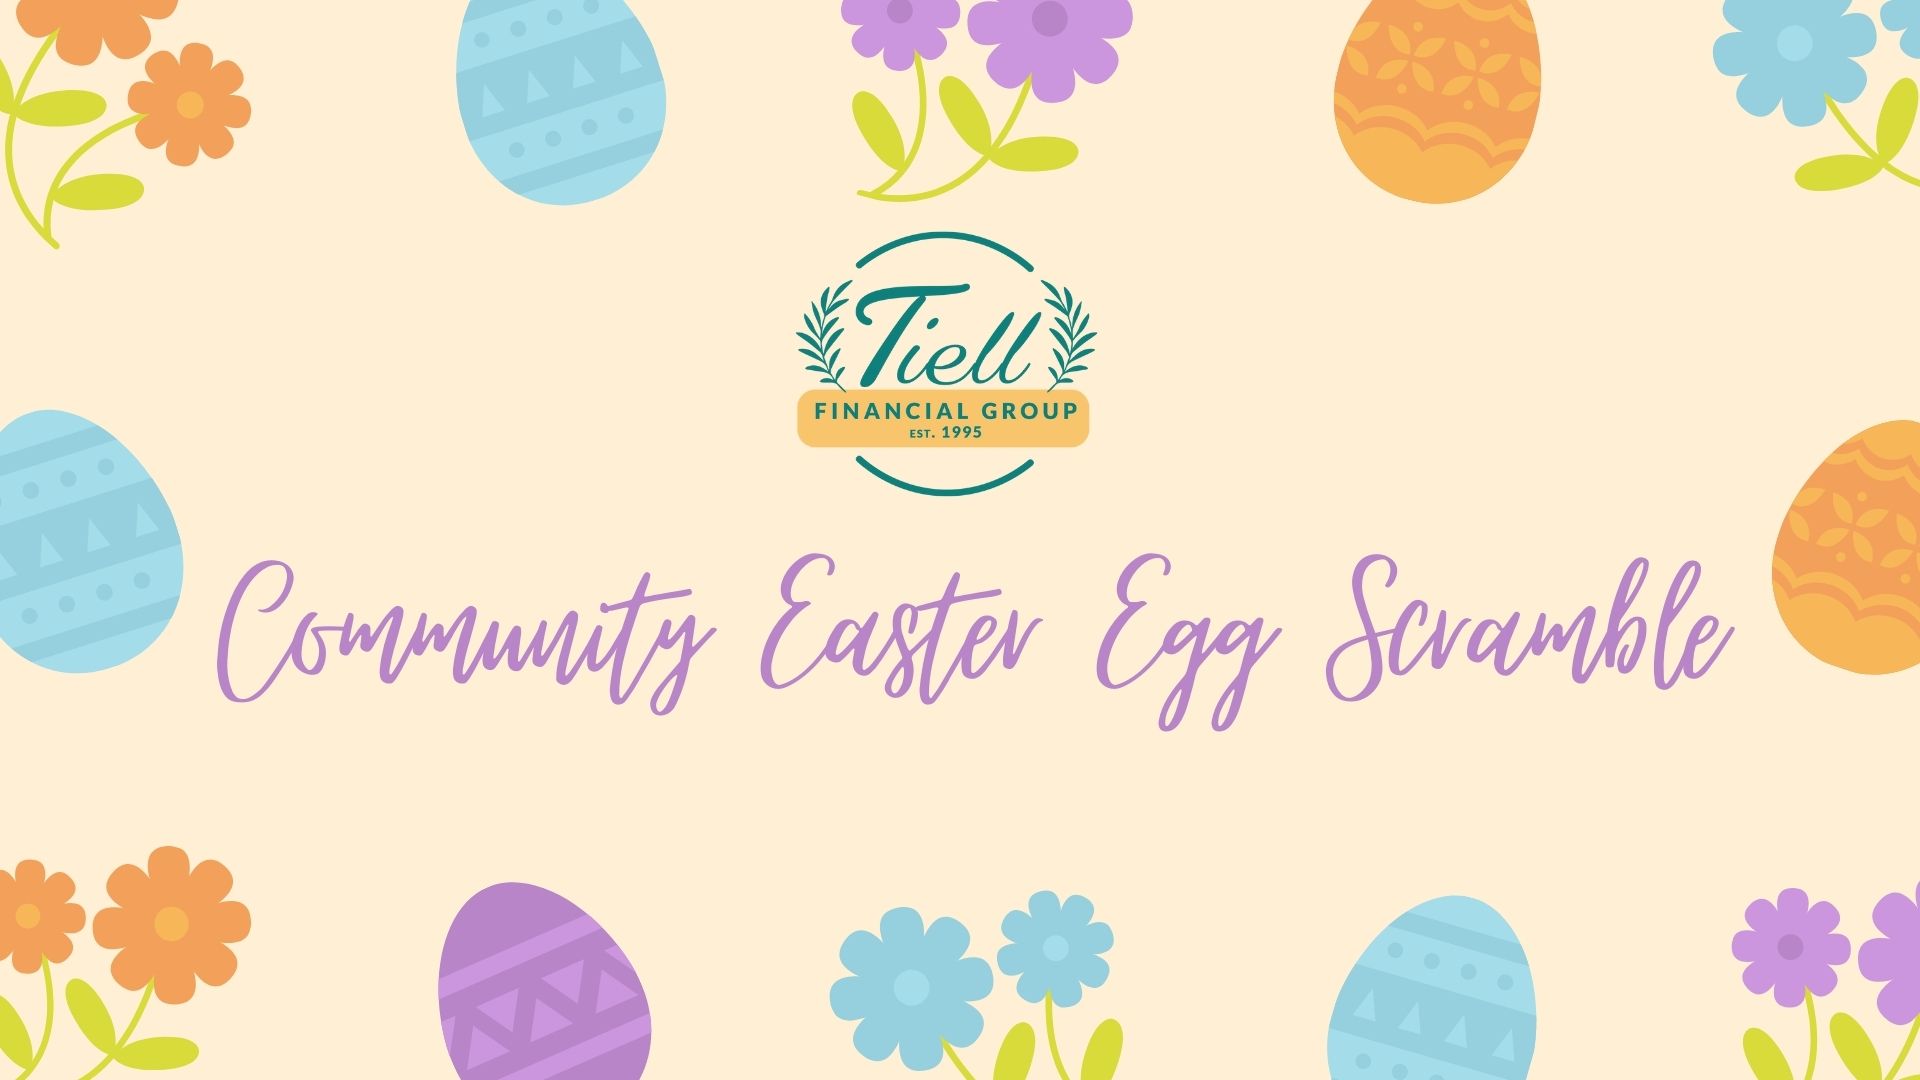 Community Easter Egg Scramble